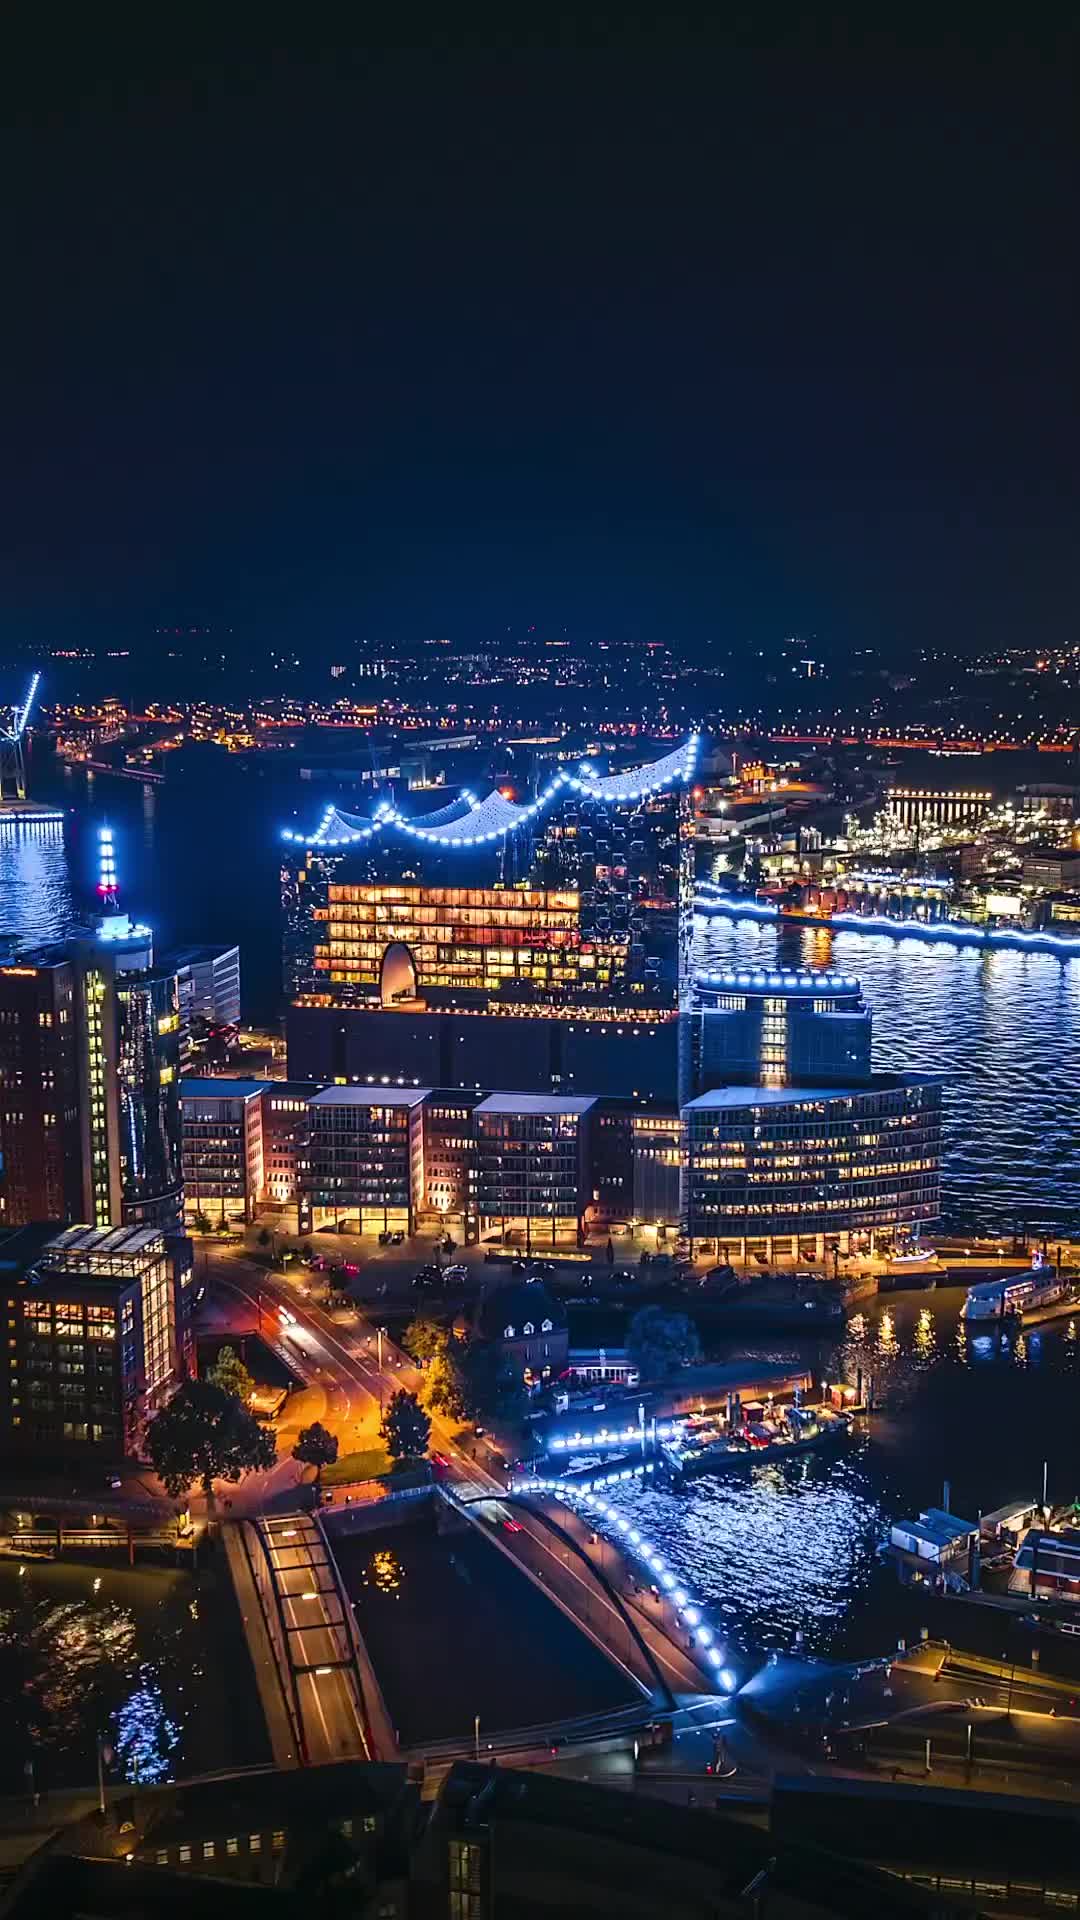 Blue Nights in Hamburg: Elbphilharmonie Illuminated